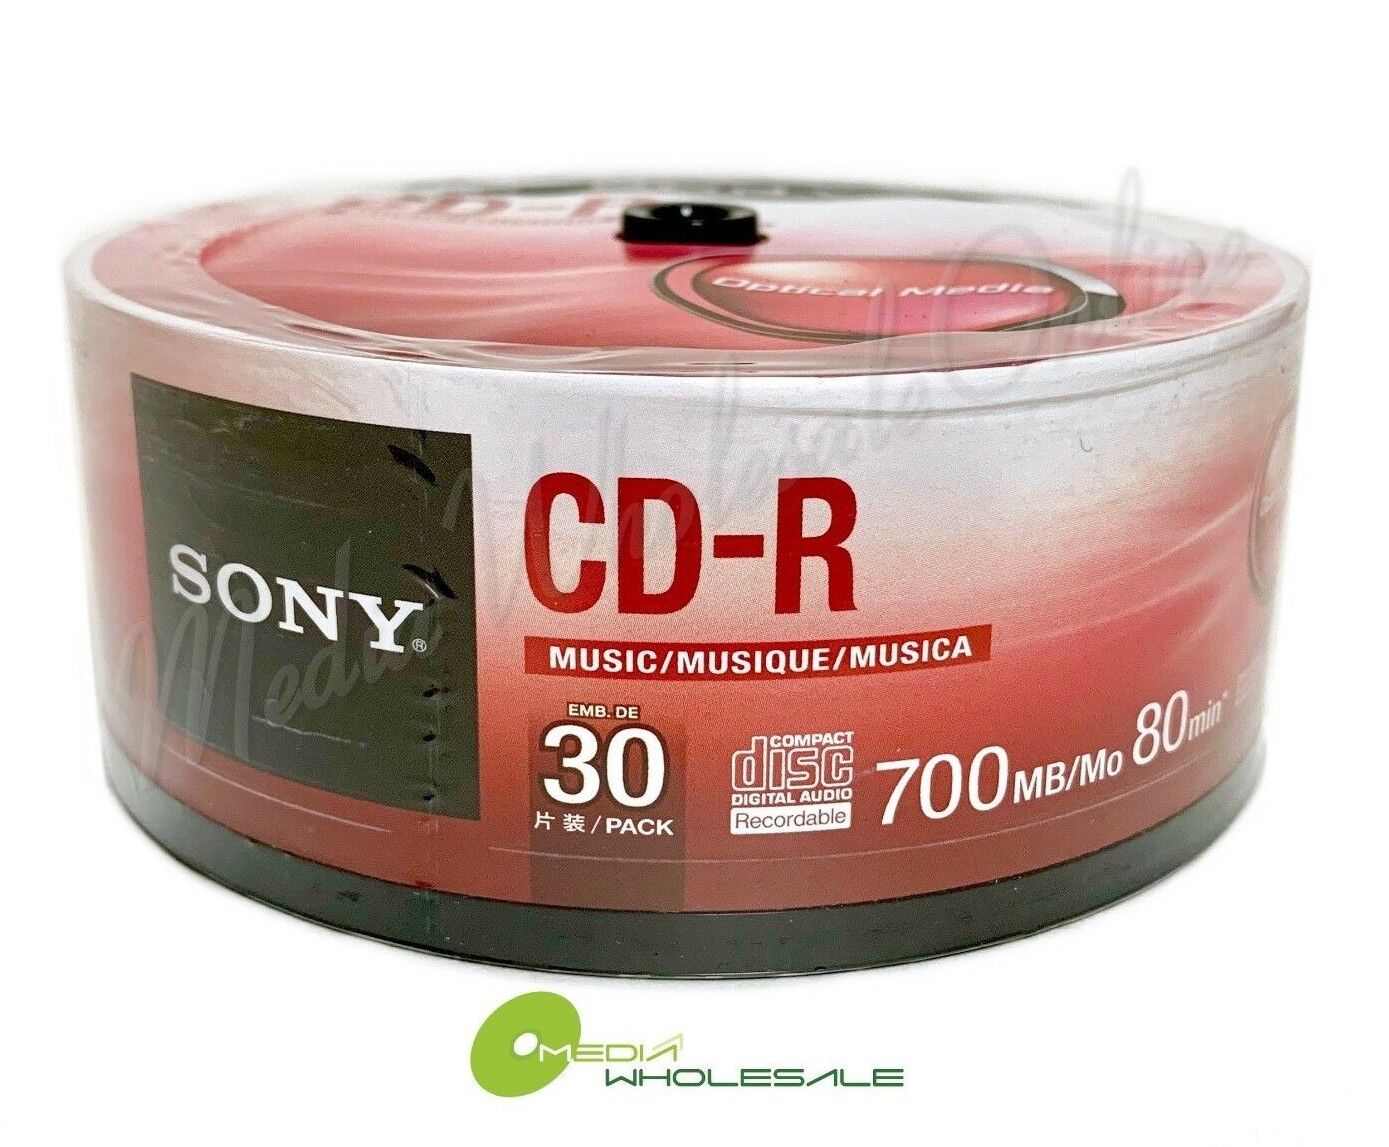 SONY Blank Music CD-R CDR Branded 80min Digital Audio 30 pack Media Disc